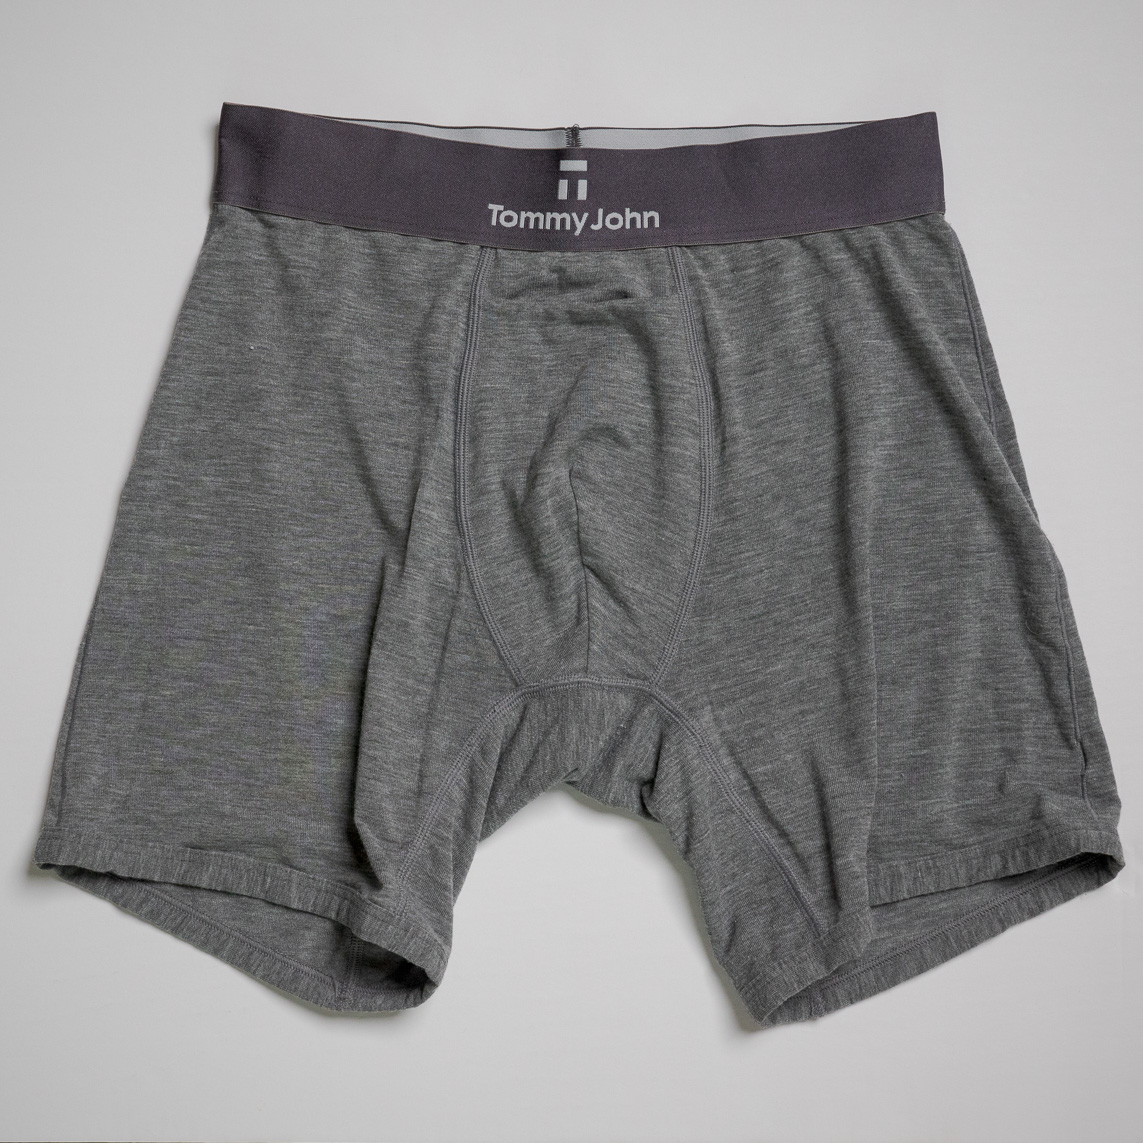 Tommy John Men's Underwear, Boxer Briefs, Second Skin Fabric with